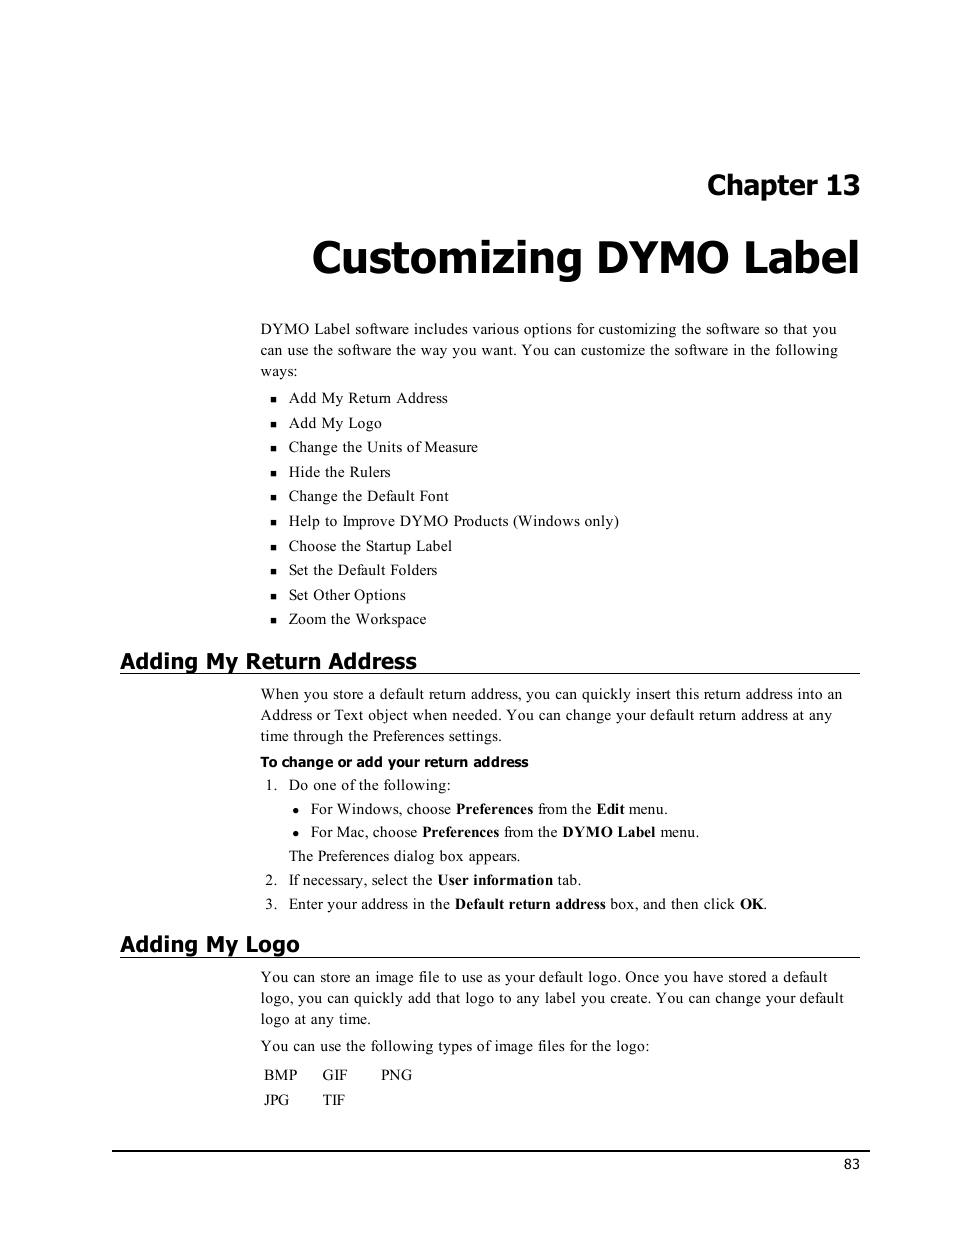 DYMO Logo - Customizing dymo label, Adding my return address, Adding my logo